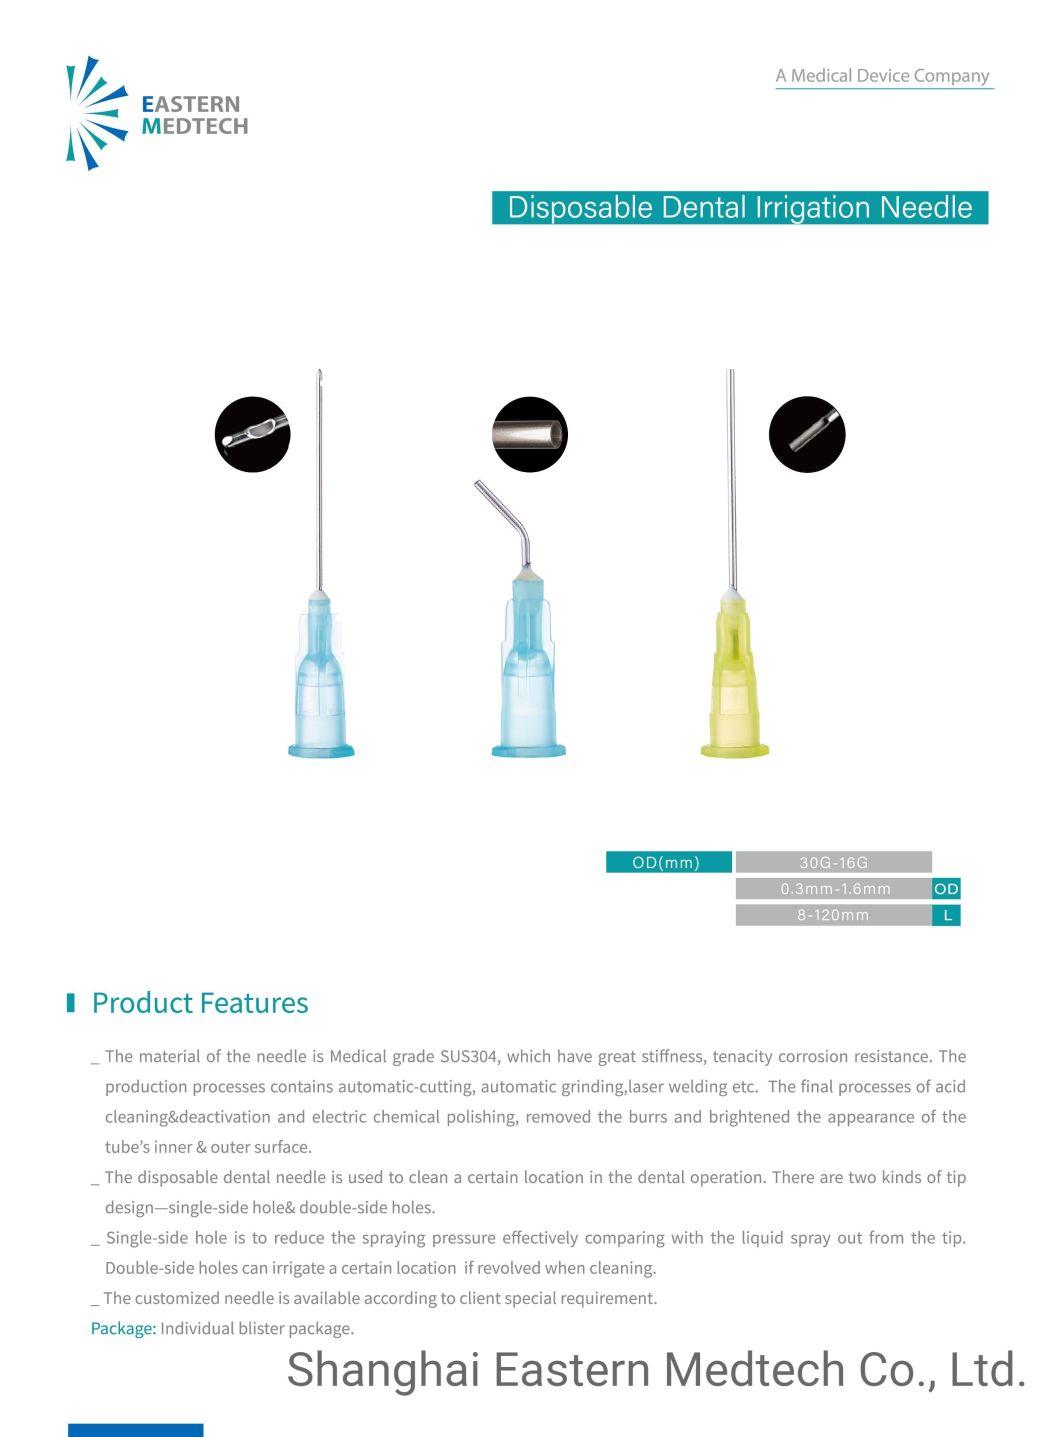 Self Made Cannula International Standard Single Use Dental Irrigation Needle Right Angle Tip